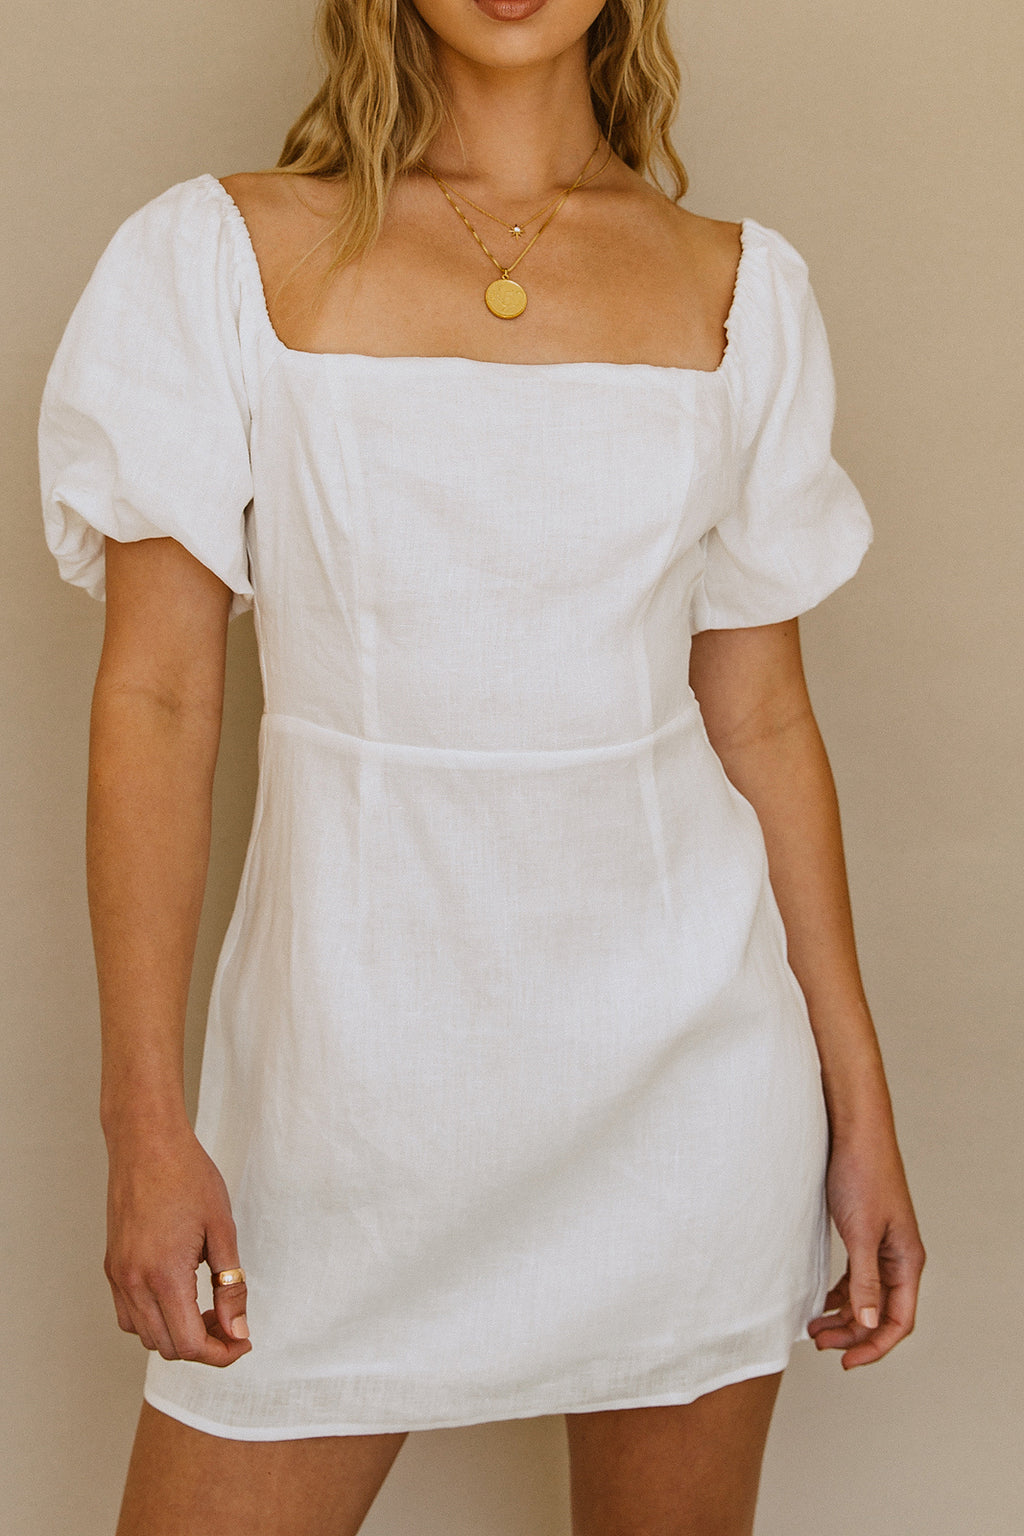 Catalina Island Linen Dress - White